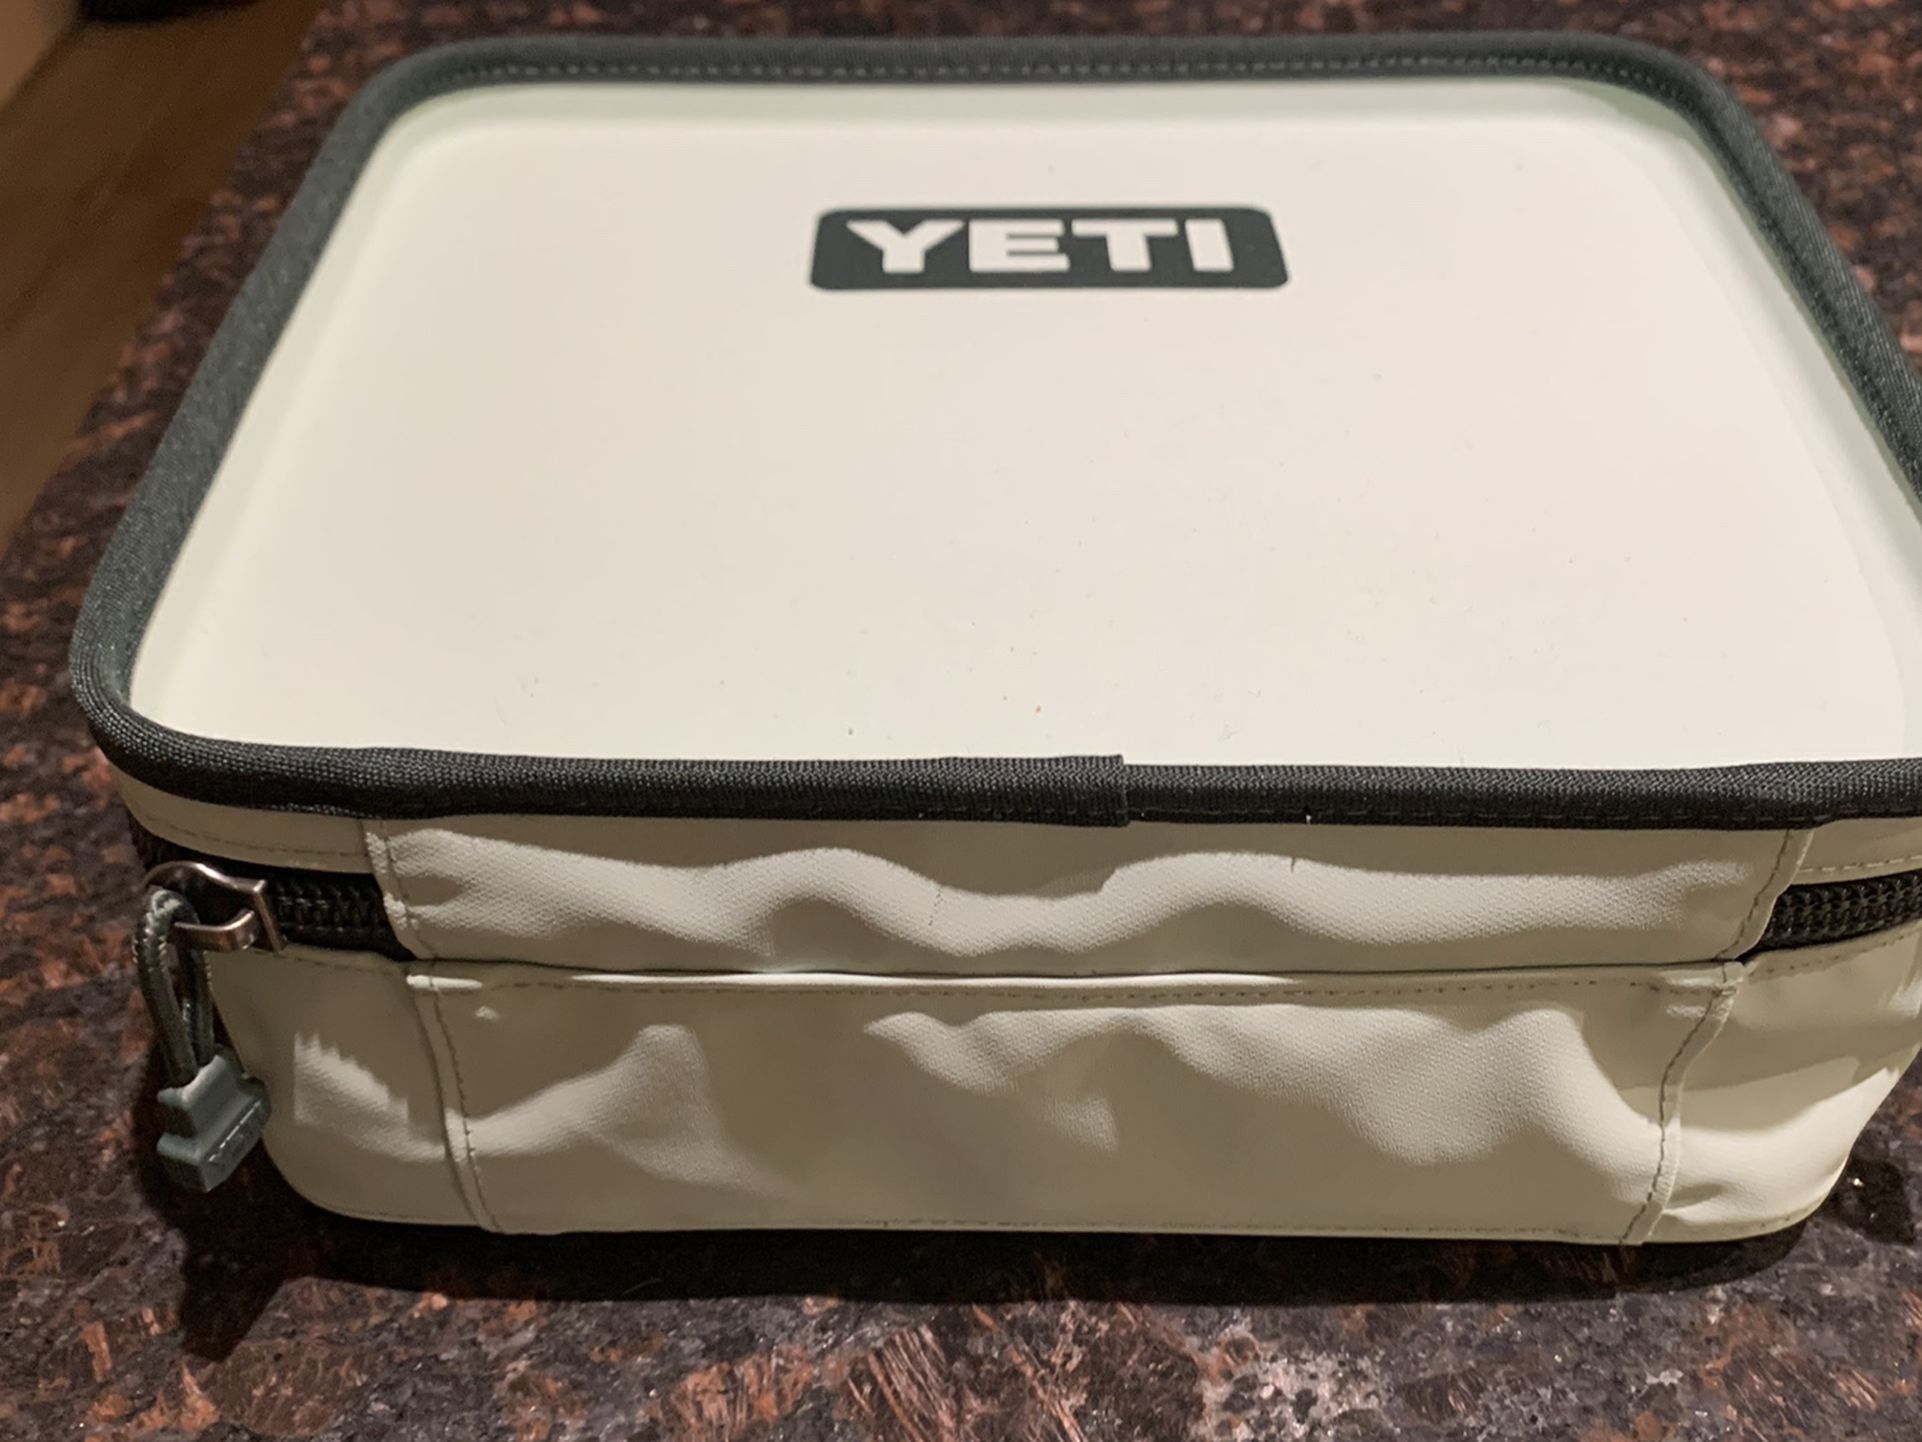 Yeti Daytrip Lunch Box Cooler